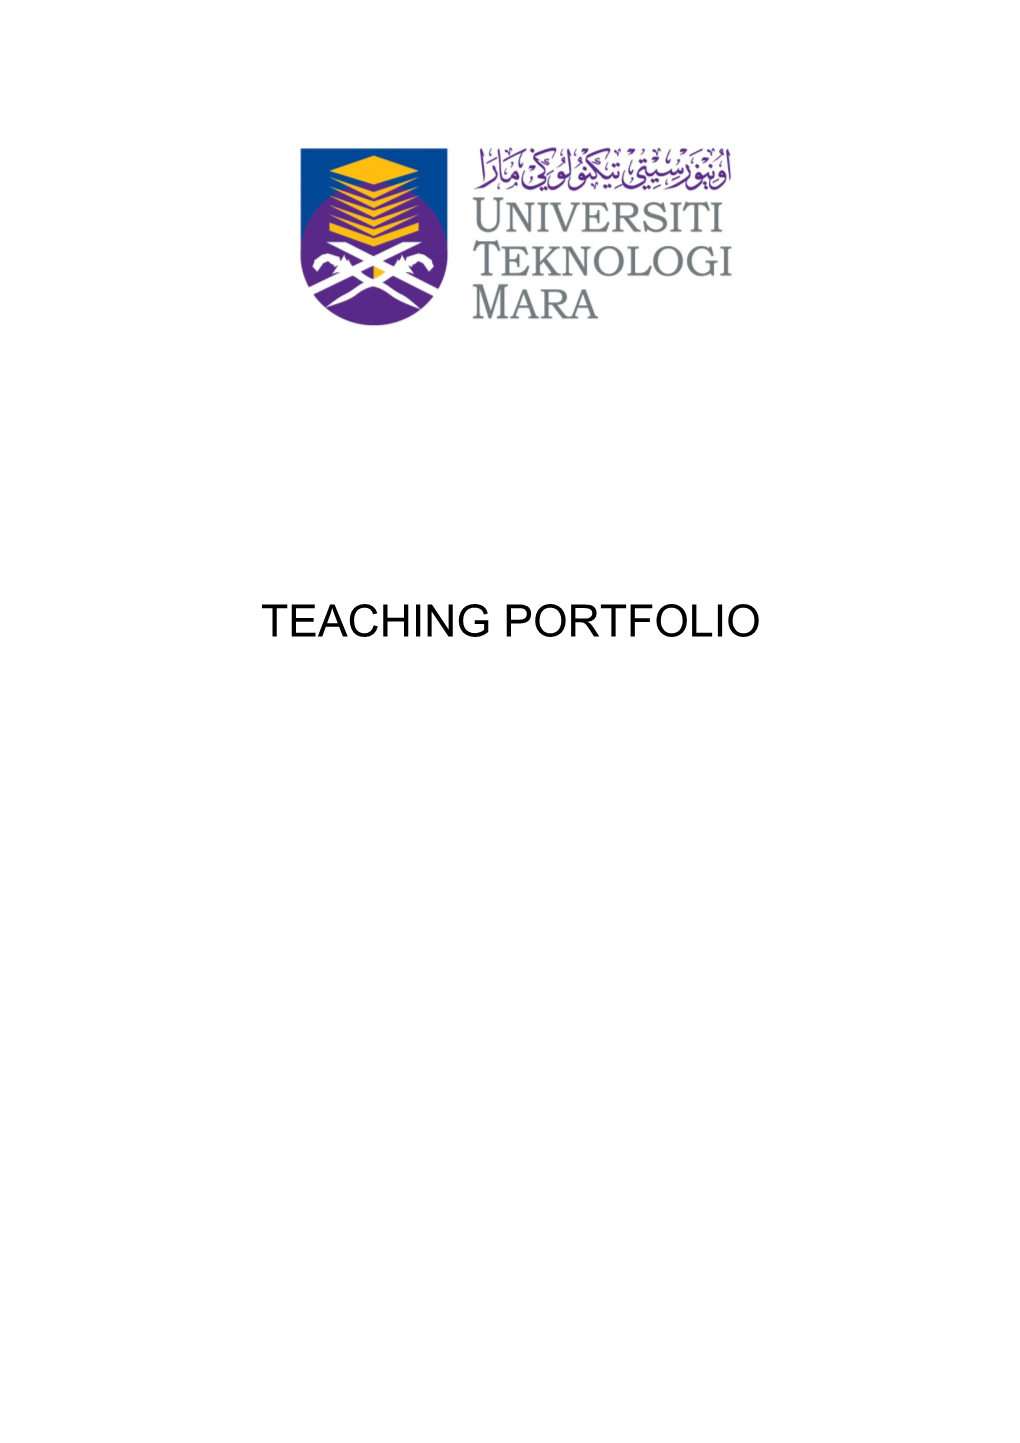 Format of the Teaching Portfolio